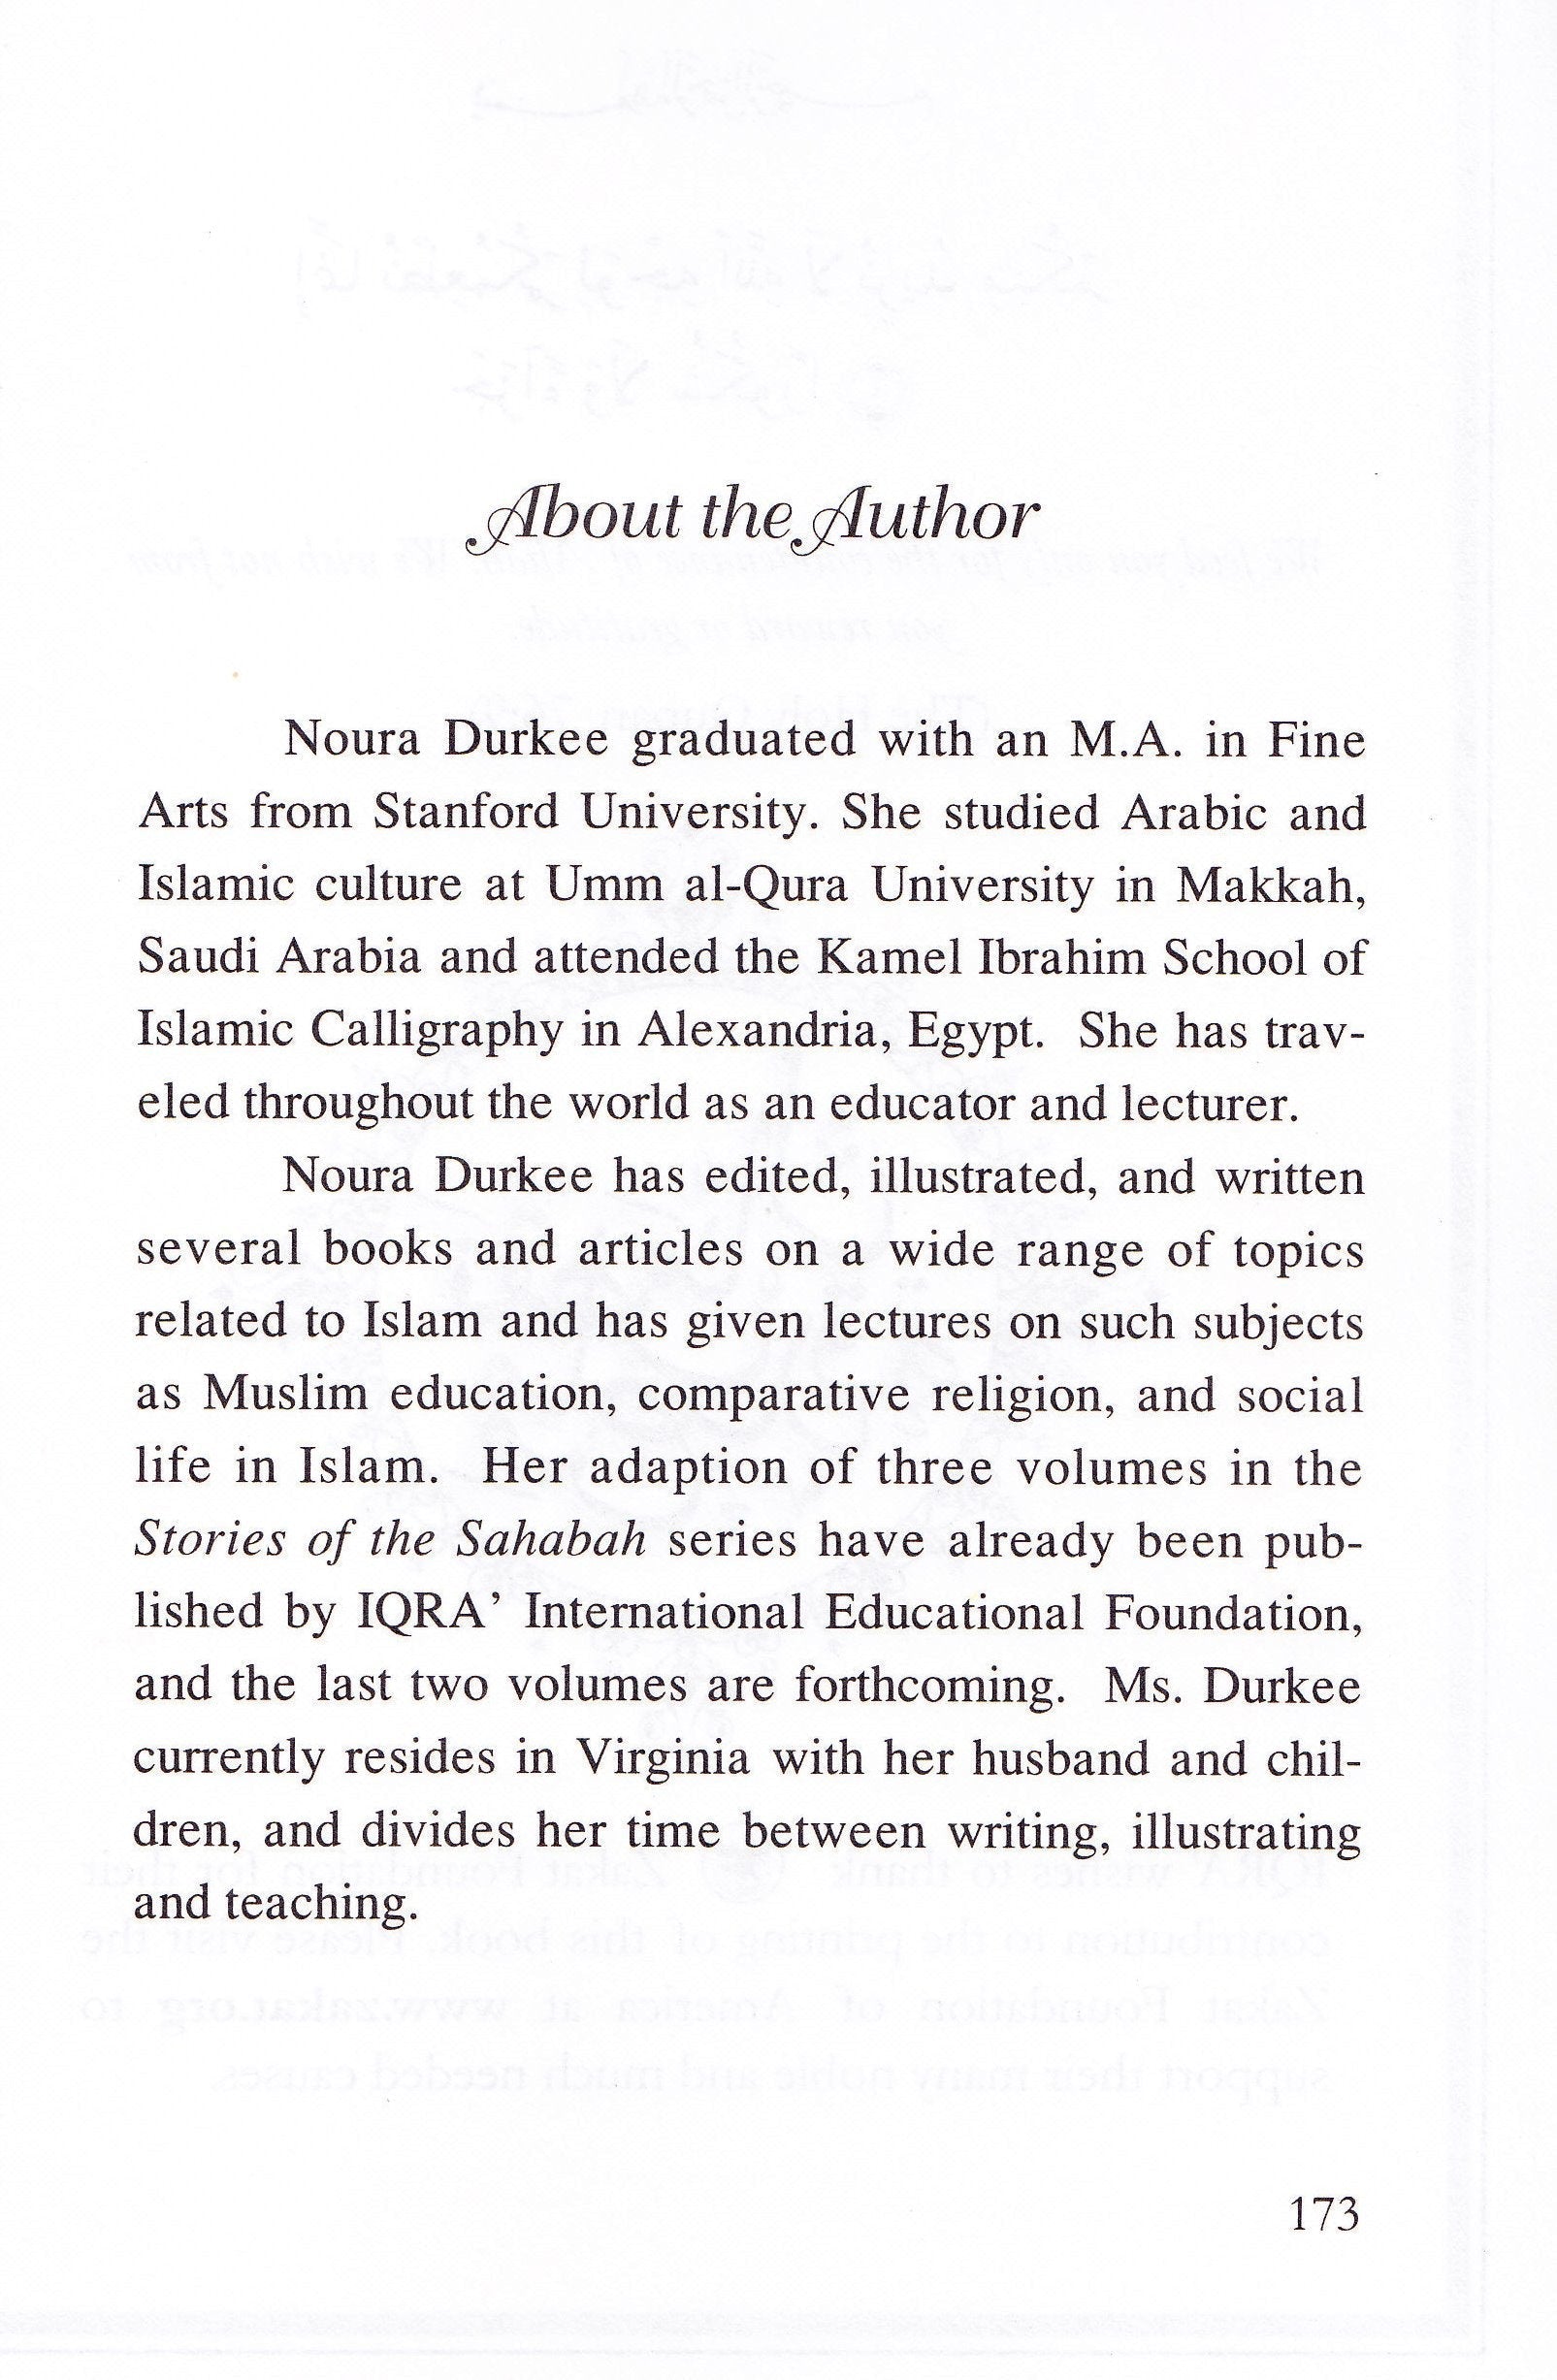 Loyal Ansar-Stories of Sahabha Volume 3 - Premium Textbook from IQRA' international Educational Foundation - Just $11! Shop now at IQRA' international Educational Foundation